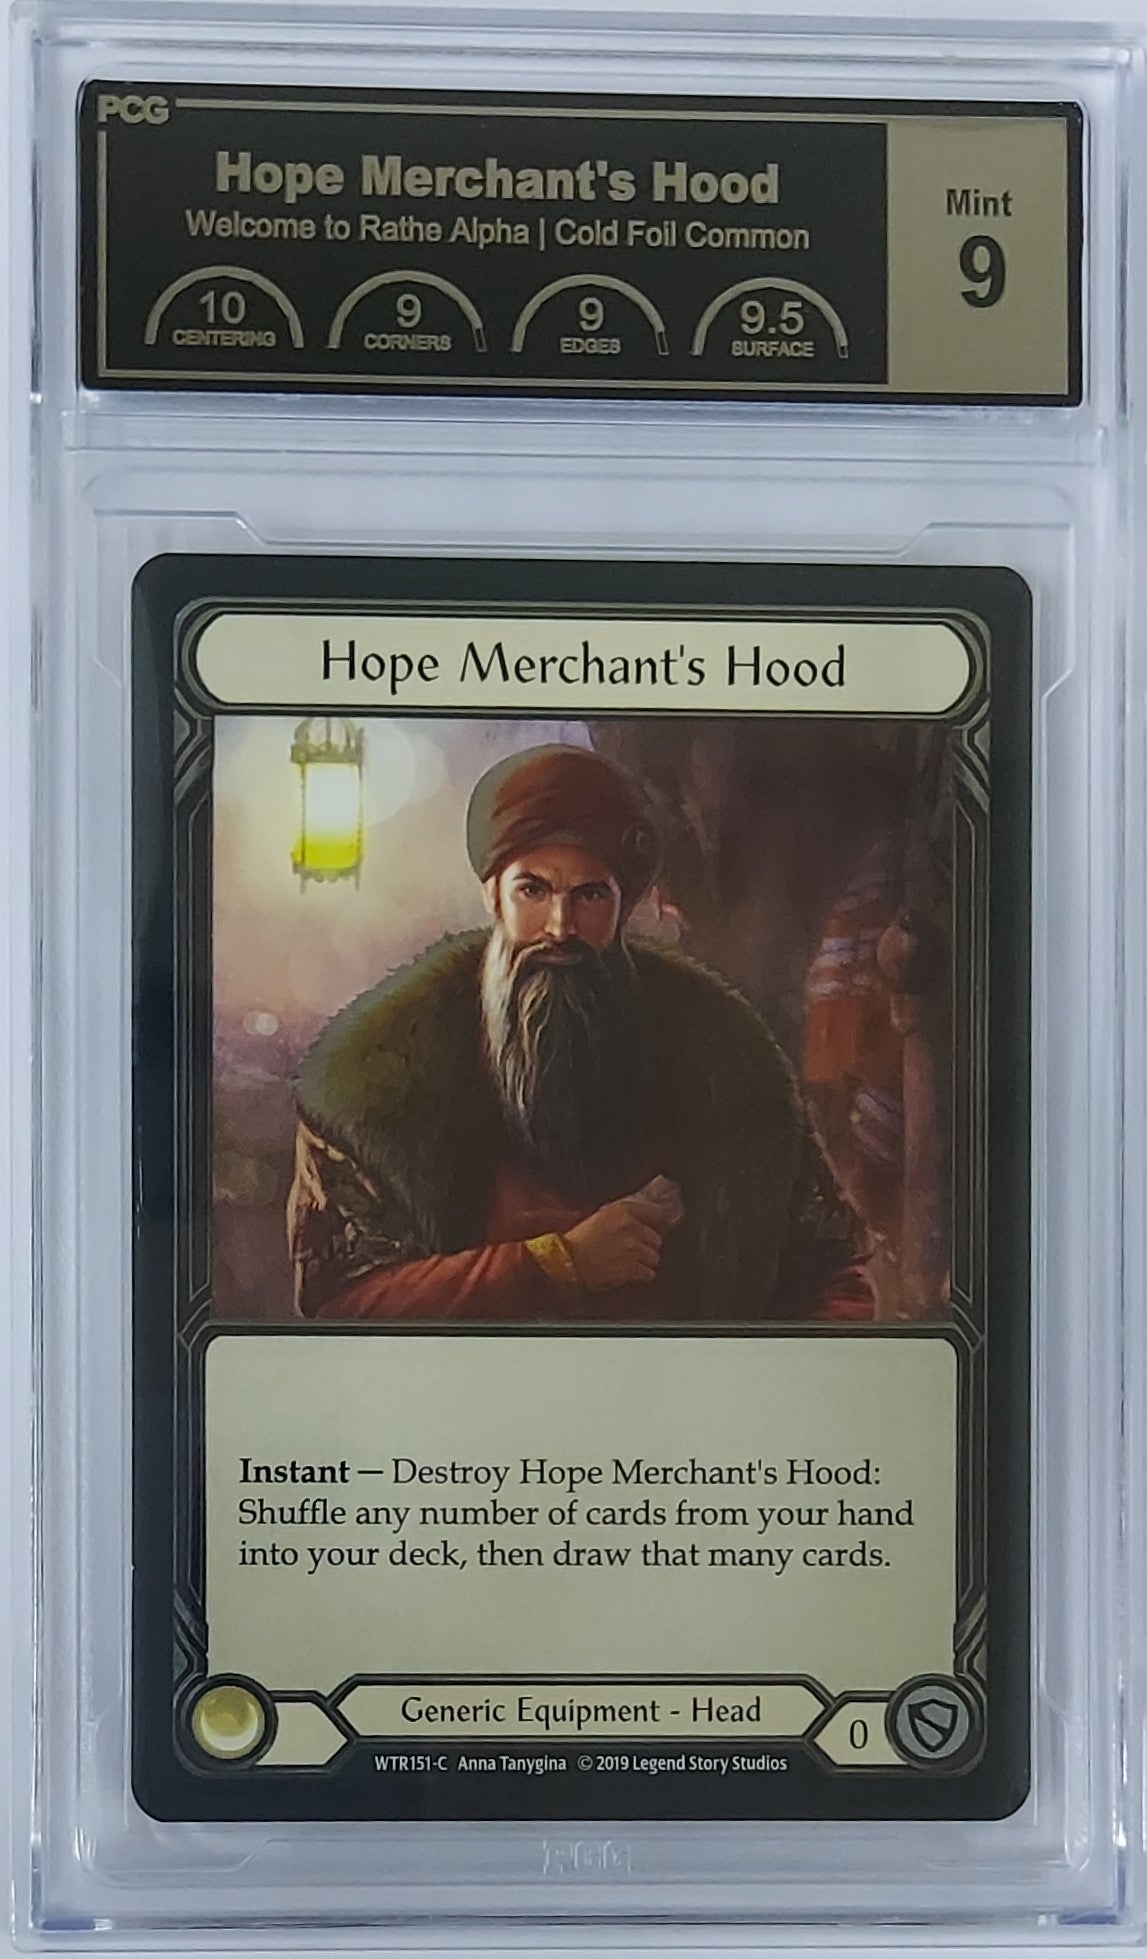 [PCG 9] Hope Merchant's Hood - WTR151-C